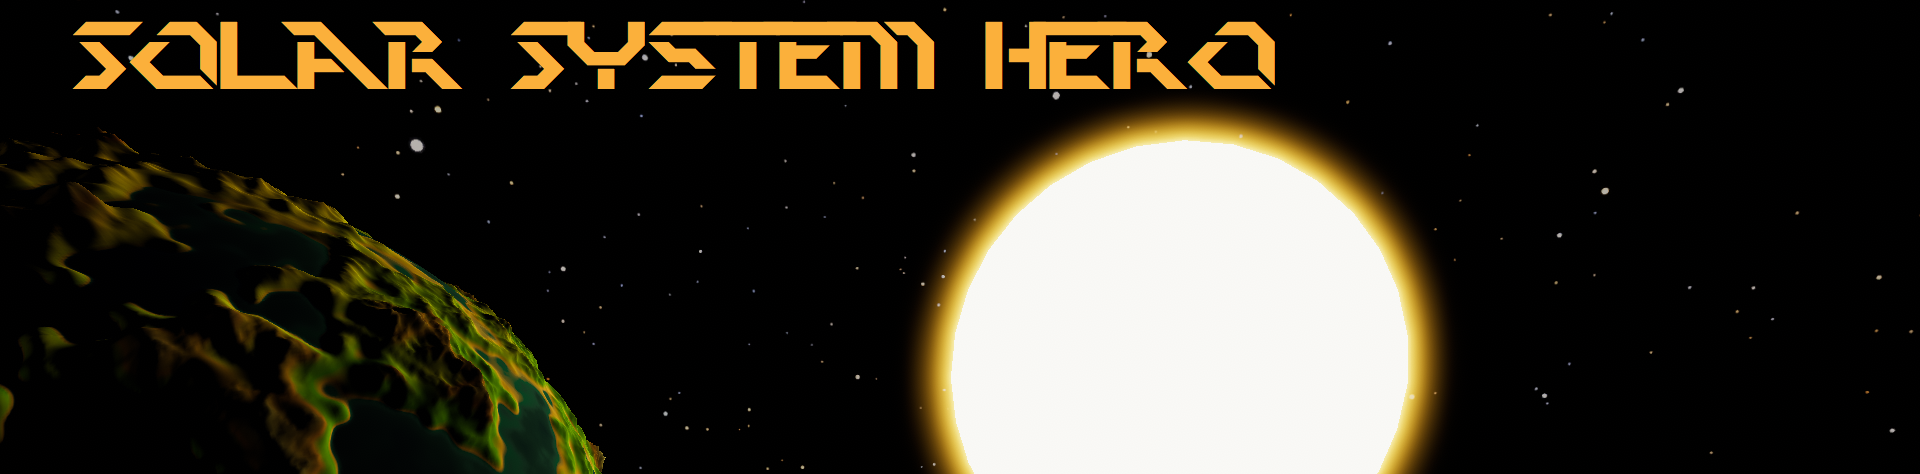 Solar System Hero